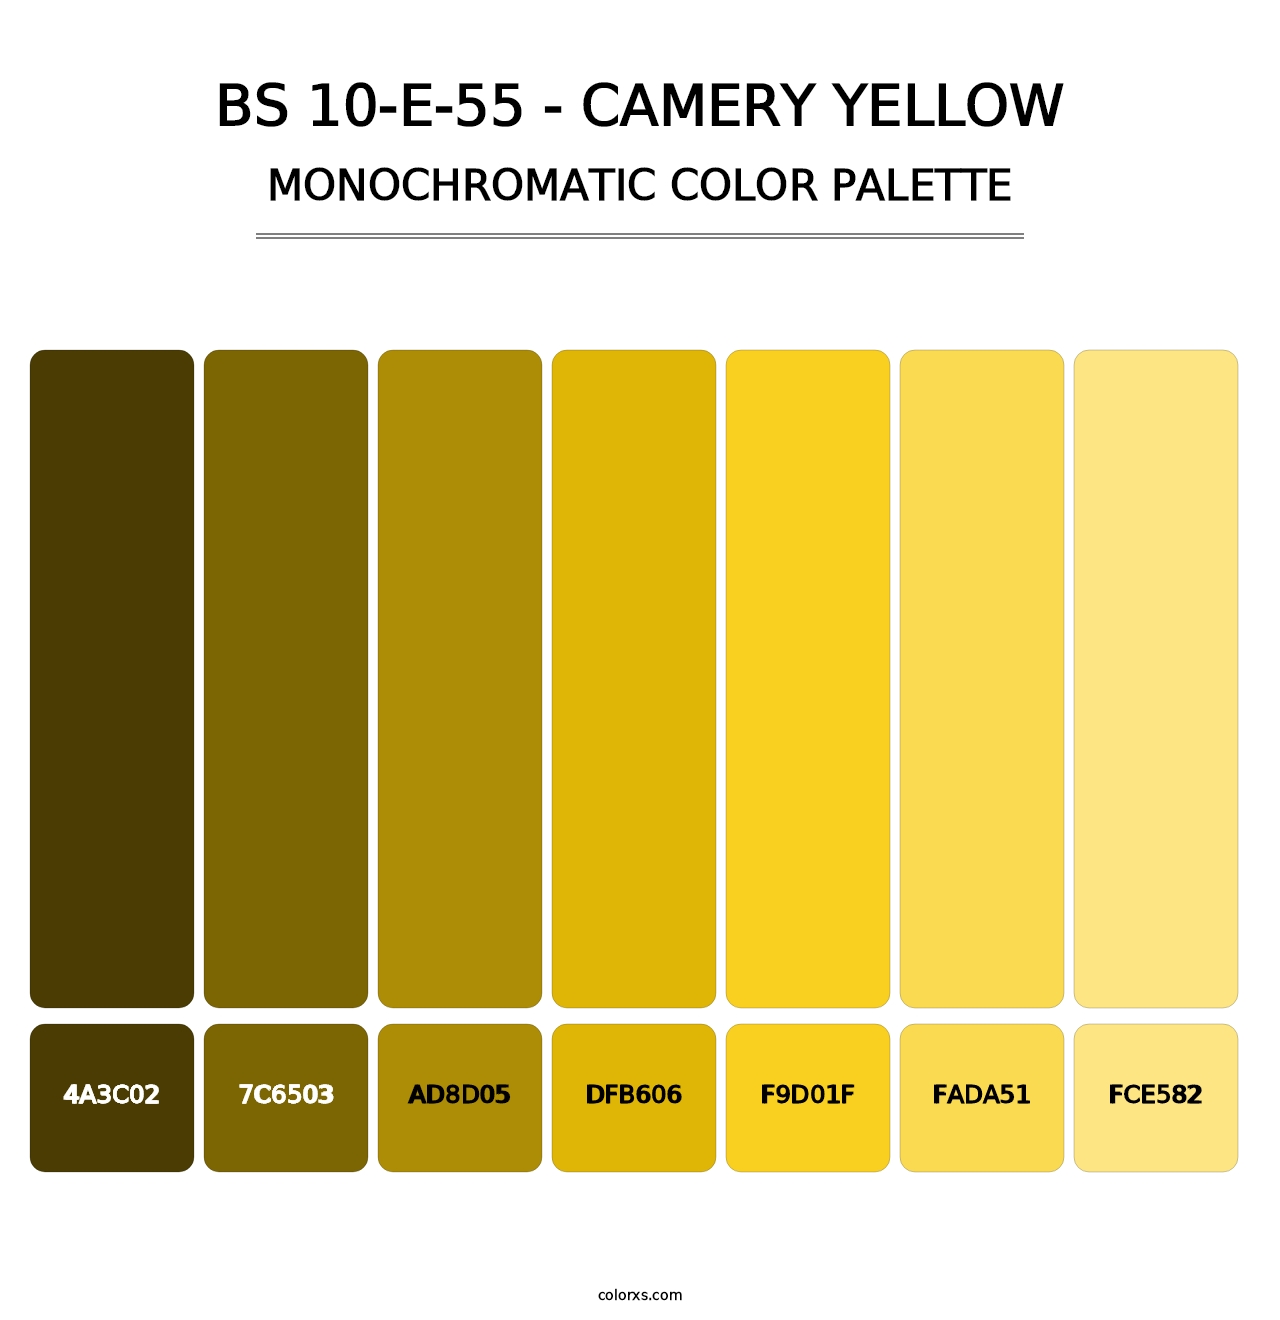 BS 10-E-55 - Camery Yellow - Monochromatic Color Palette